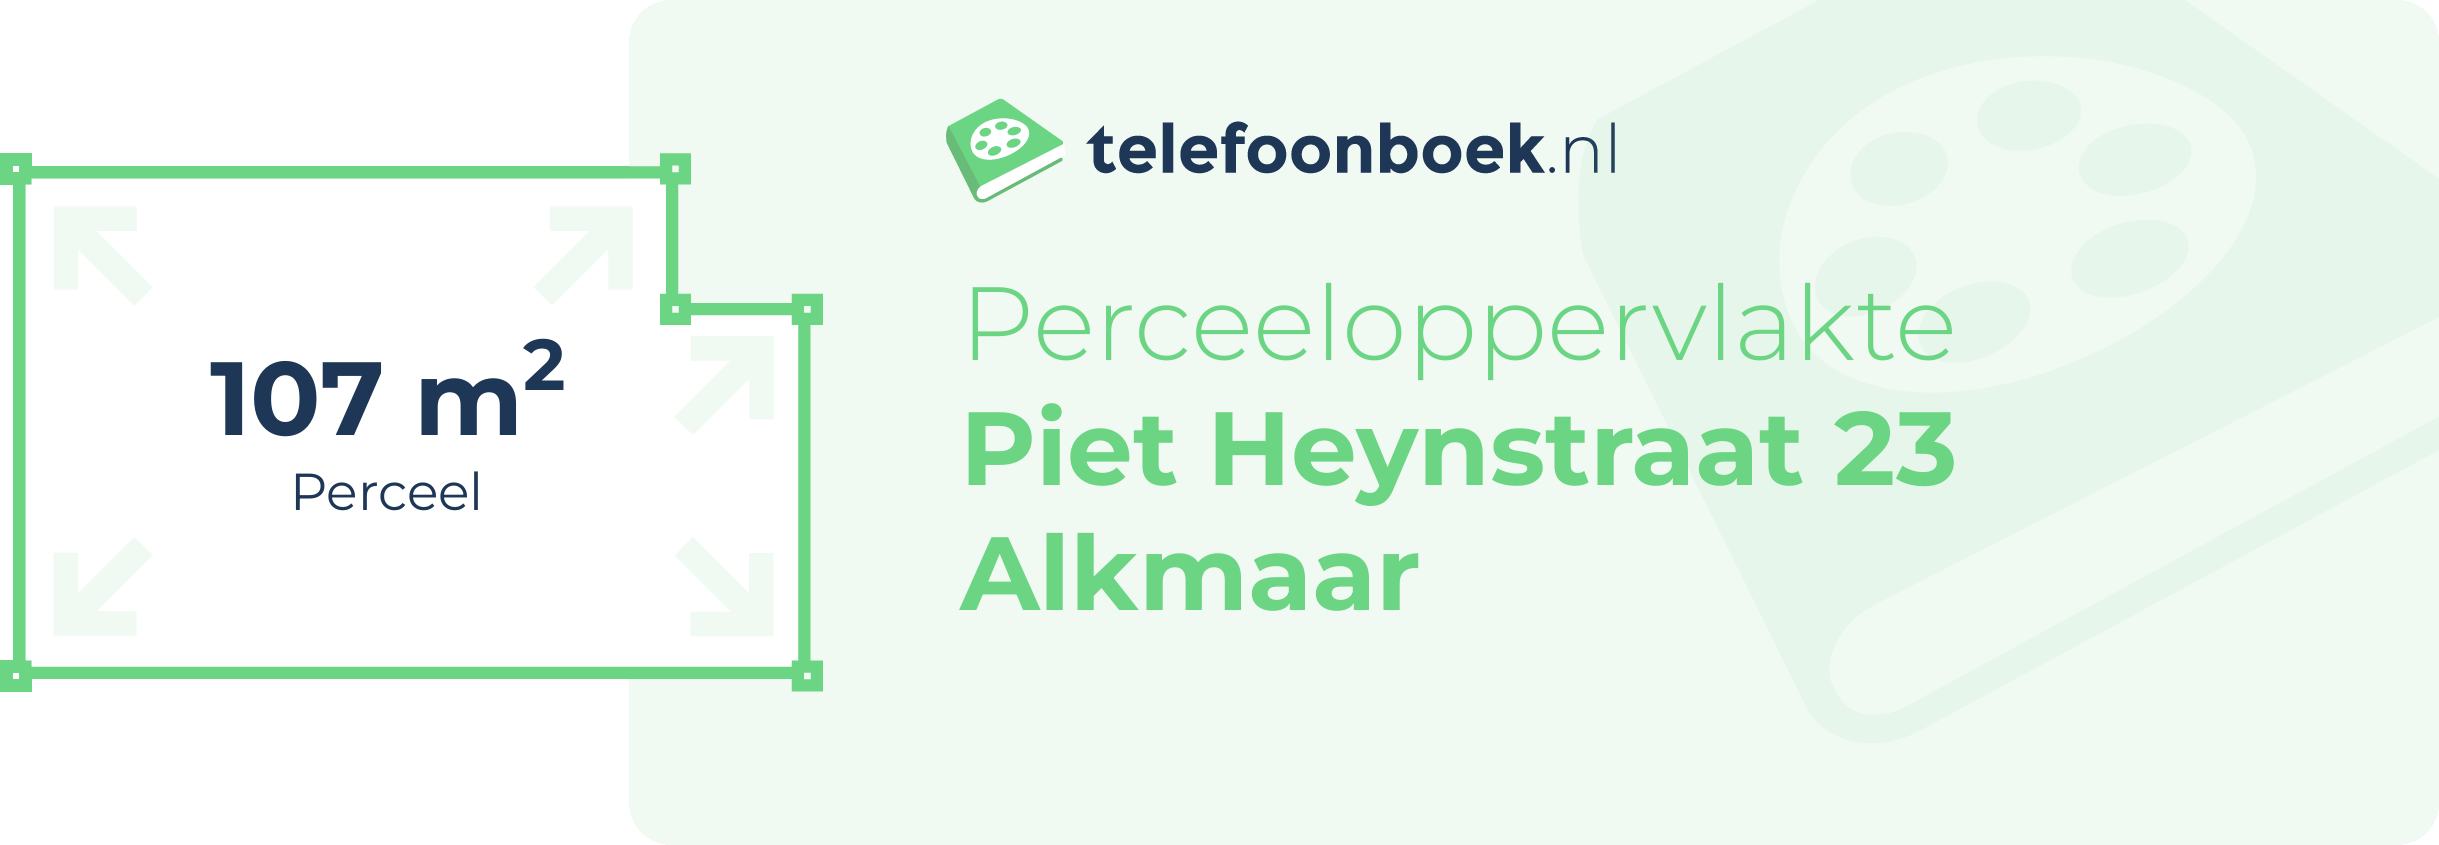 Perceeloppervlakte Piet Heynstraat 23 Alkmaar